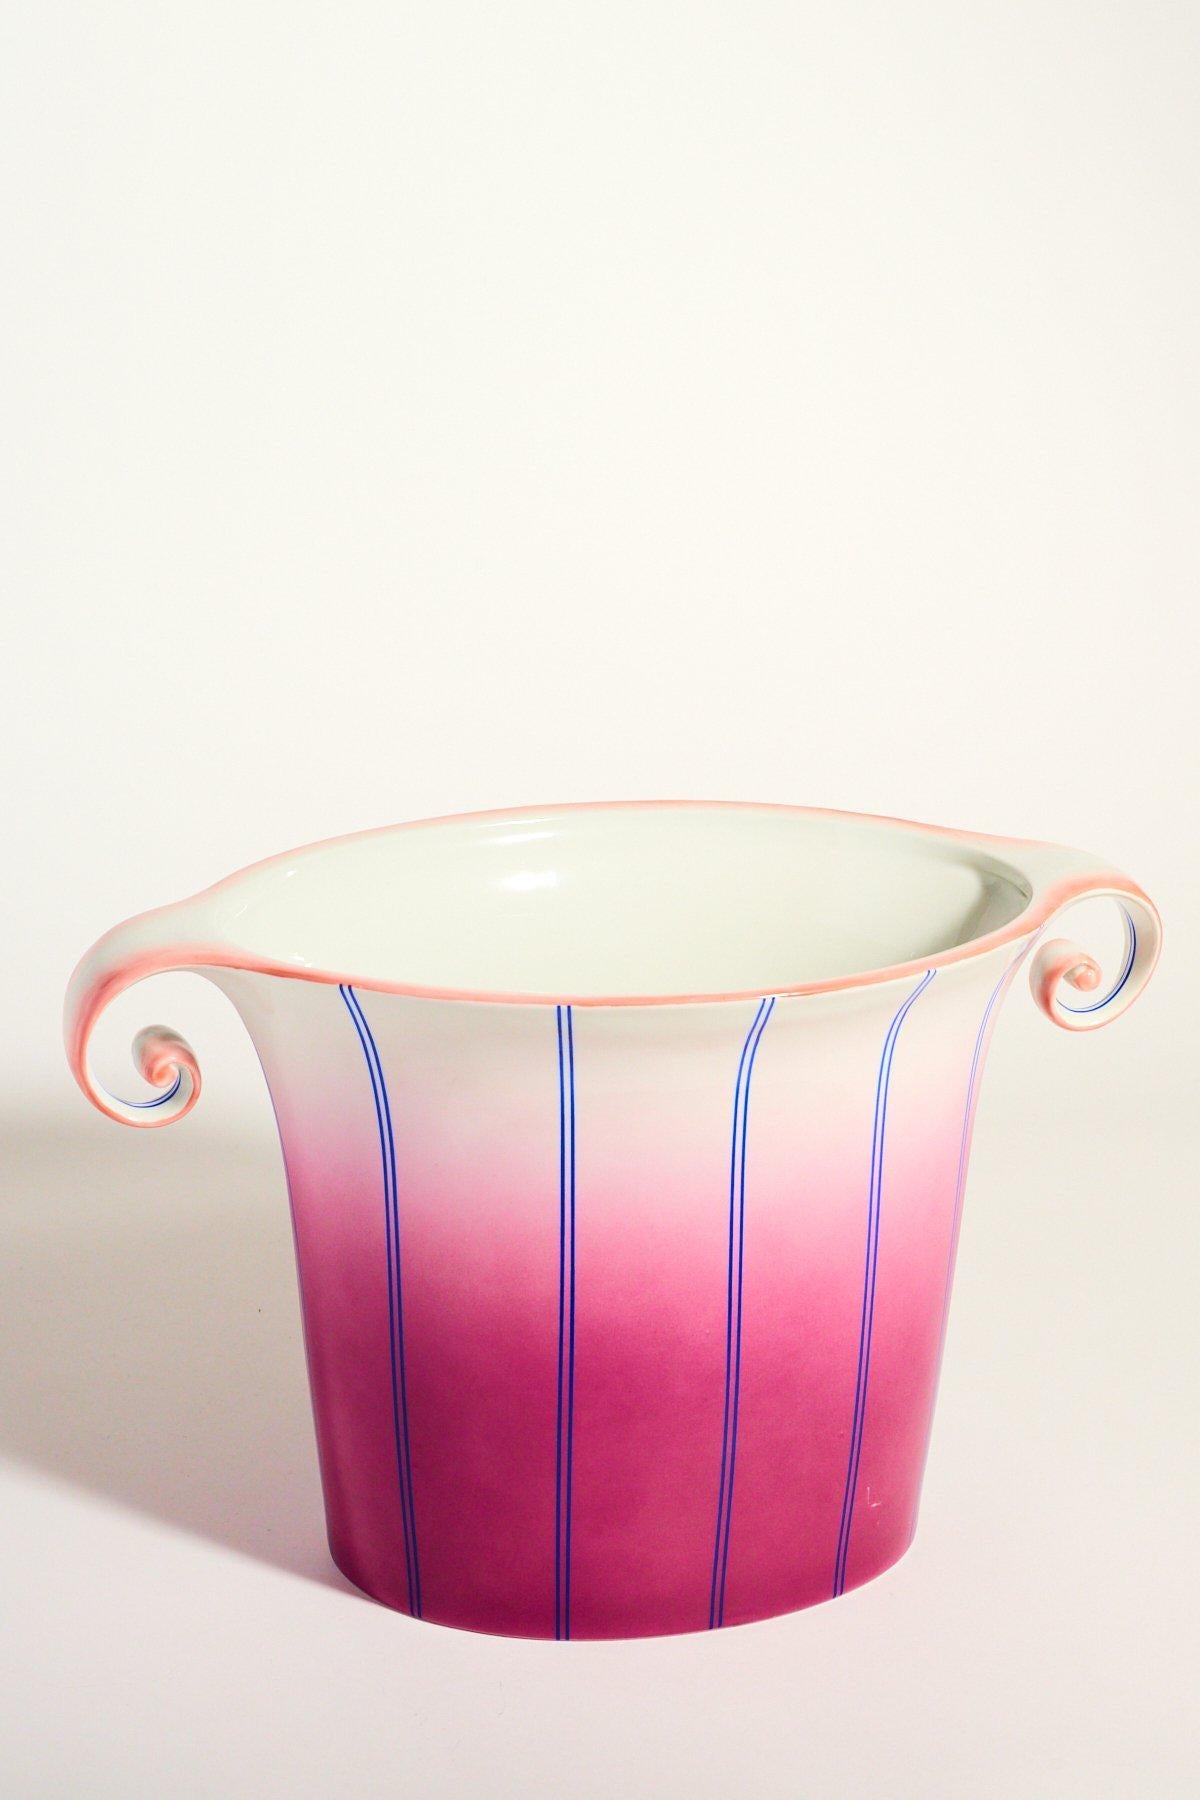 Hand-Painted Giulia Mangani Italian Porcelain Sculptural Vase